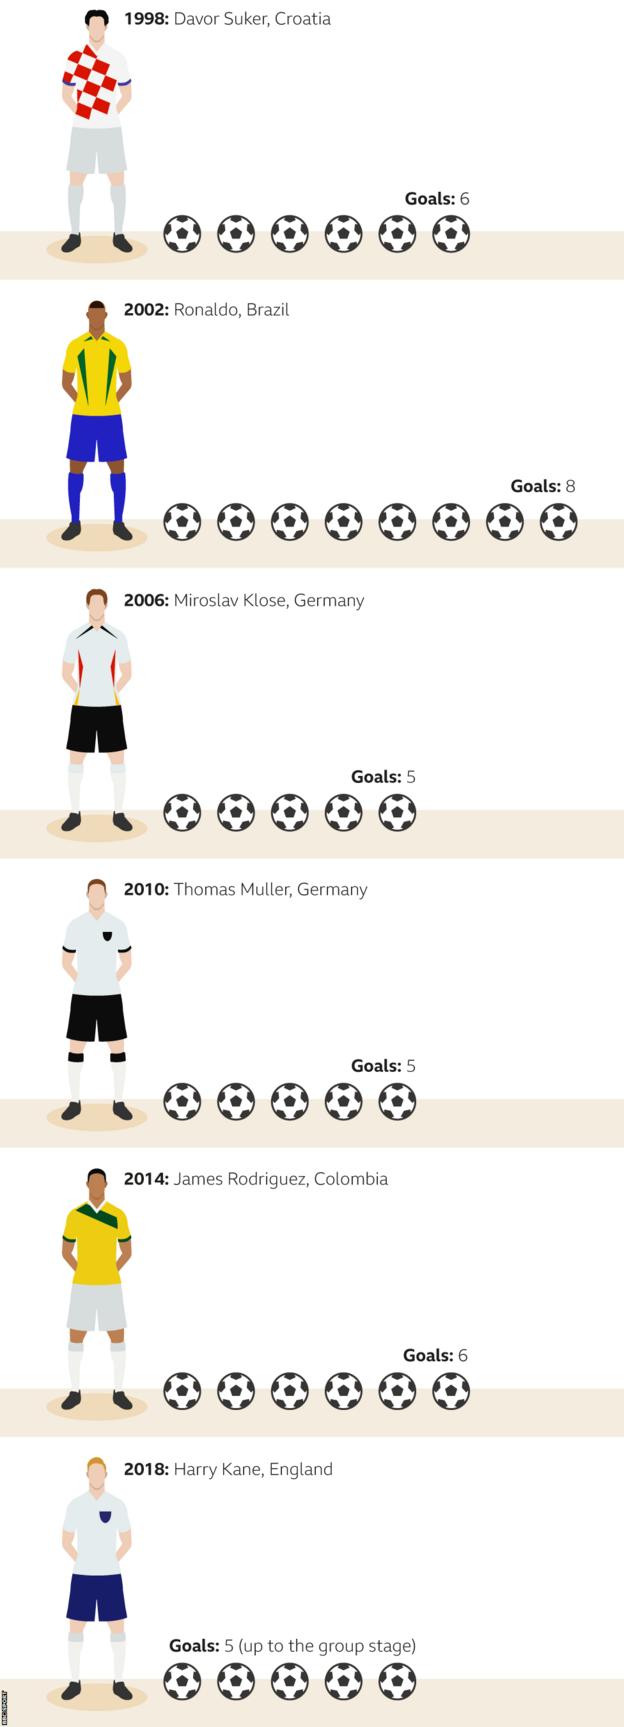 World Cup Golden Boot winners since 1998. 1998 - Davor Suker of Croatia, six goals. 2002 - Ronaldo of Brazil, eight goals. 2006 - Miroslav Klose of Germany, five goals. 2010 - Thomas Muller of Germany, five goals. 2014 - James Rodriguez of Colombia, six goals. 2018 - current leader is Harry Kane of England, five goals.